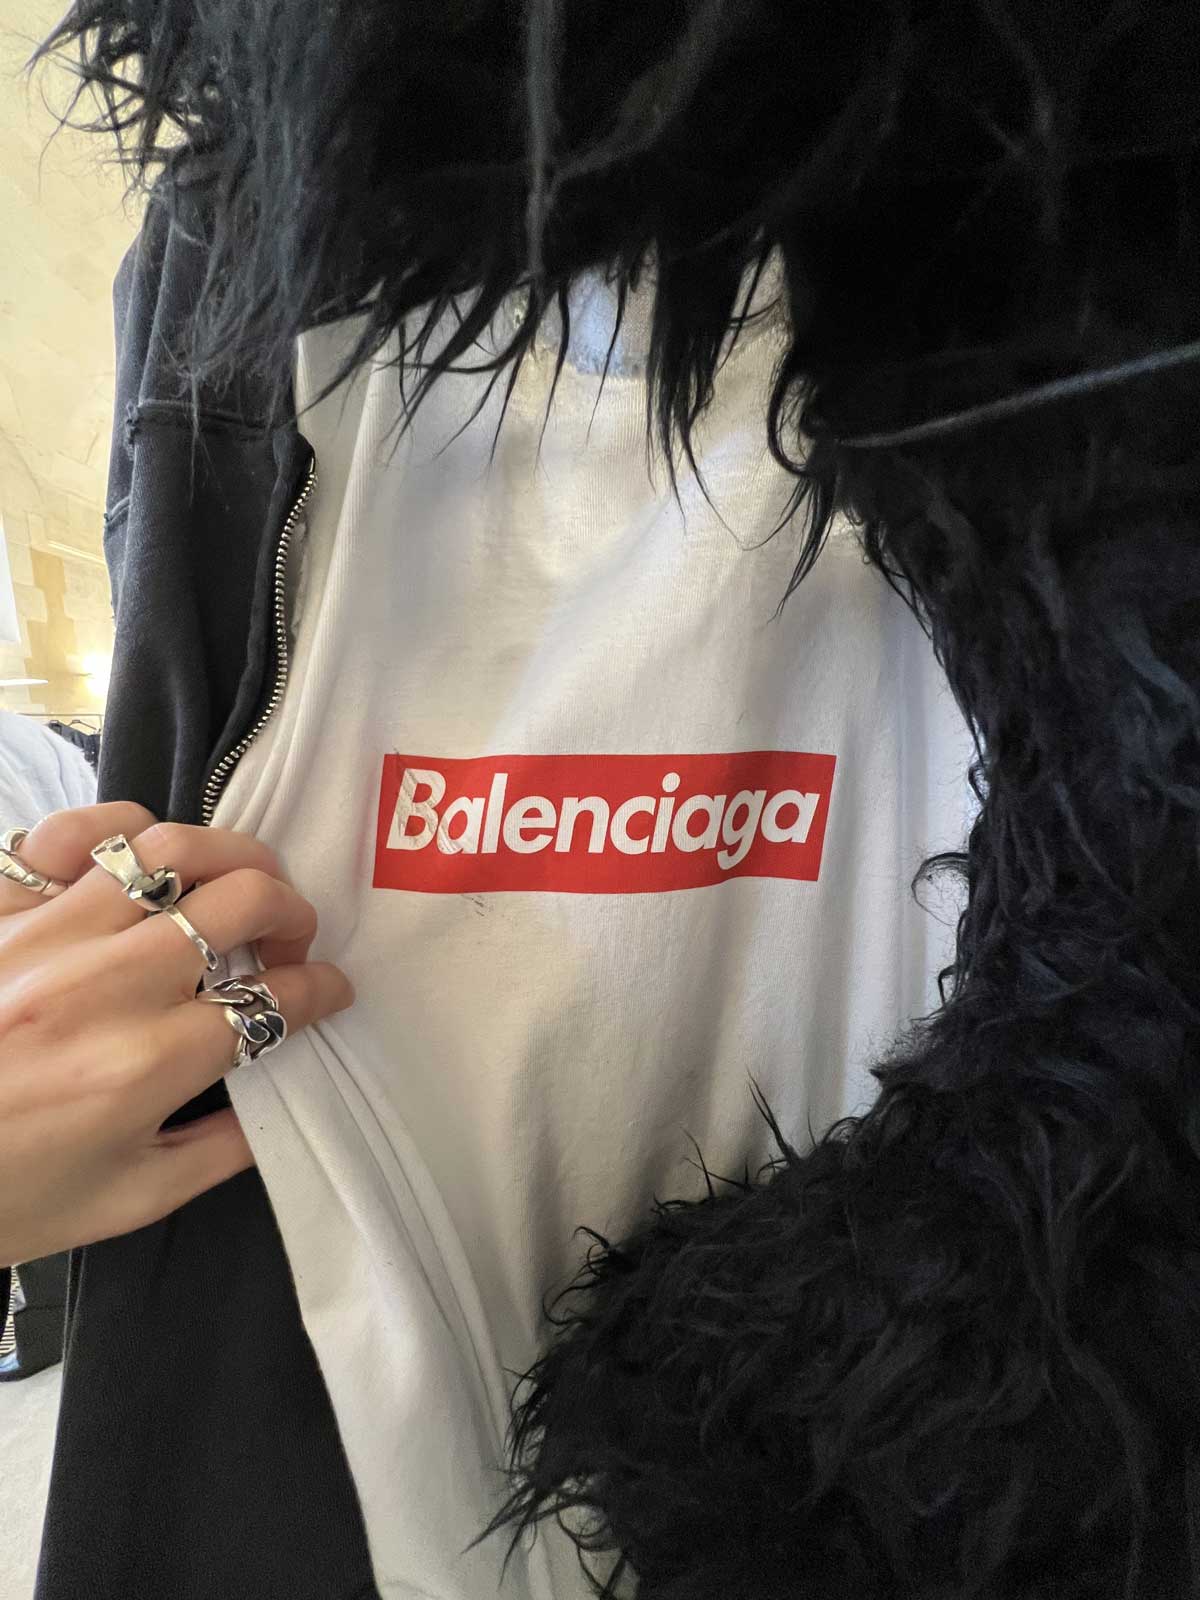 Channel Trash Bag Chic in This $850 USD Balenciaga Shirt